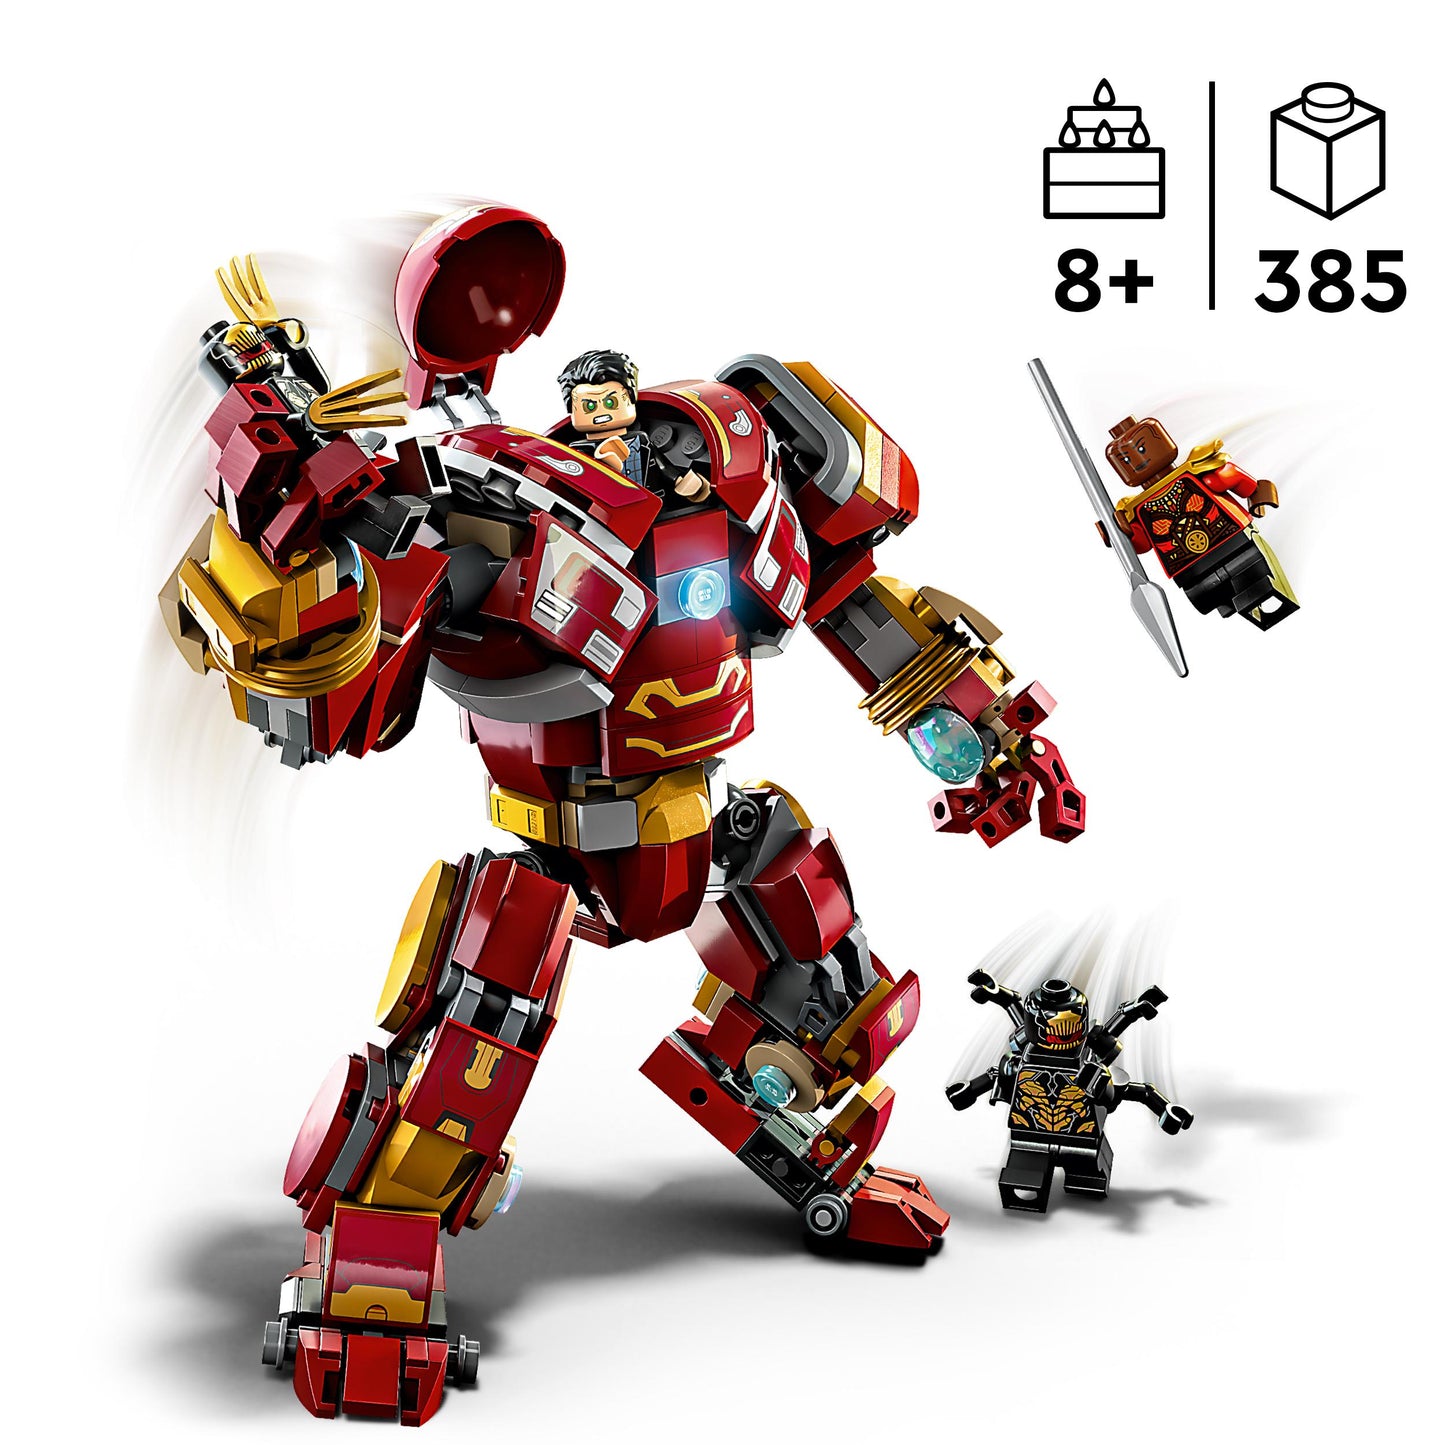 76247 LEGO Marvel Super Heroes - Hulkbuster: La battaglia di Wakanda